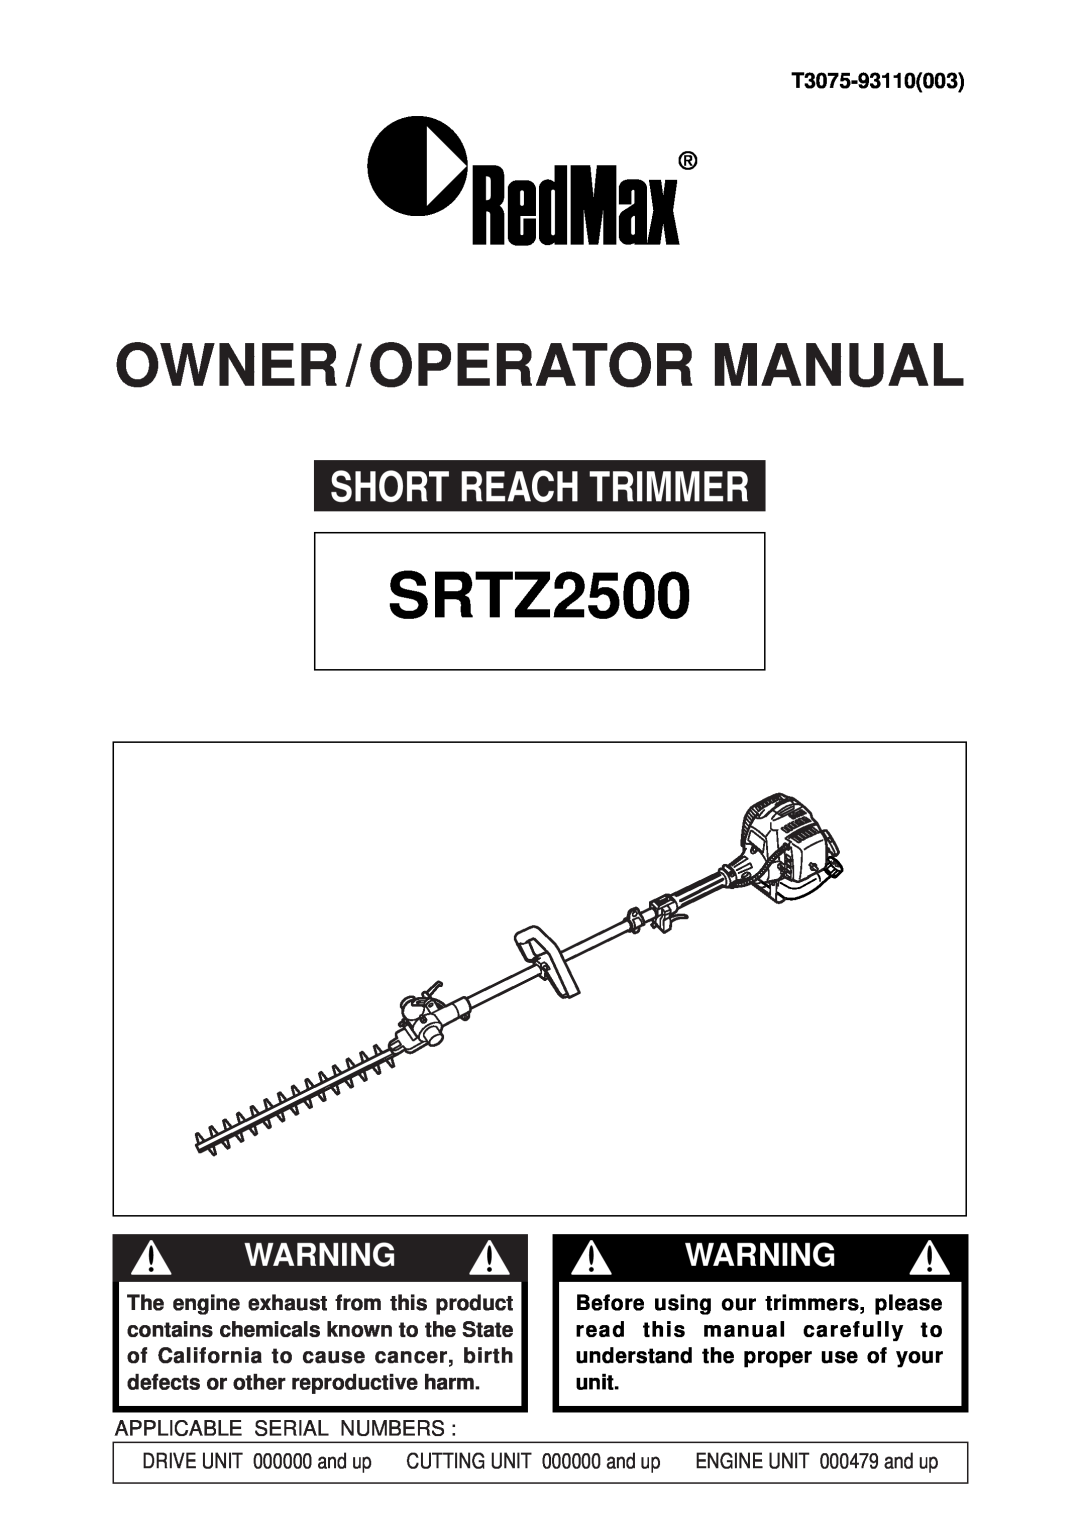 RedMax SRTZ2500 manual Short Reach Trimmer, Owner / Operator Manual, Warningwarning 